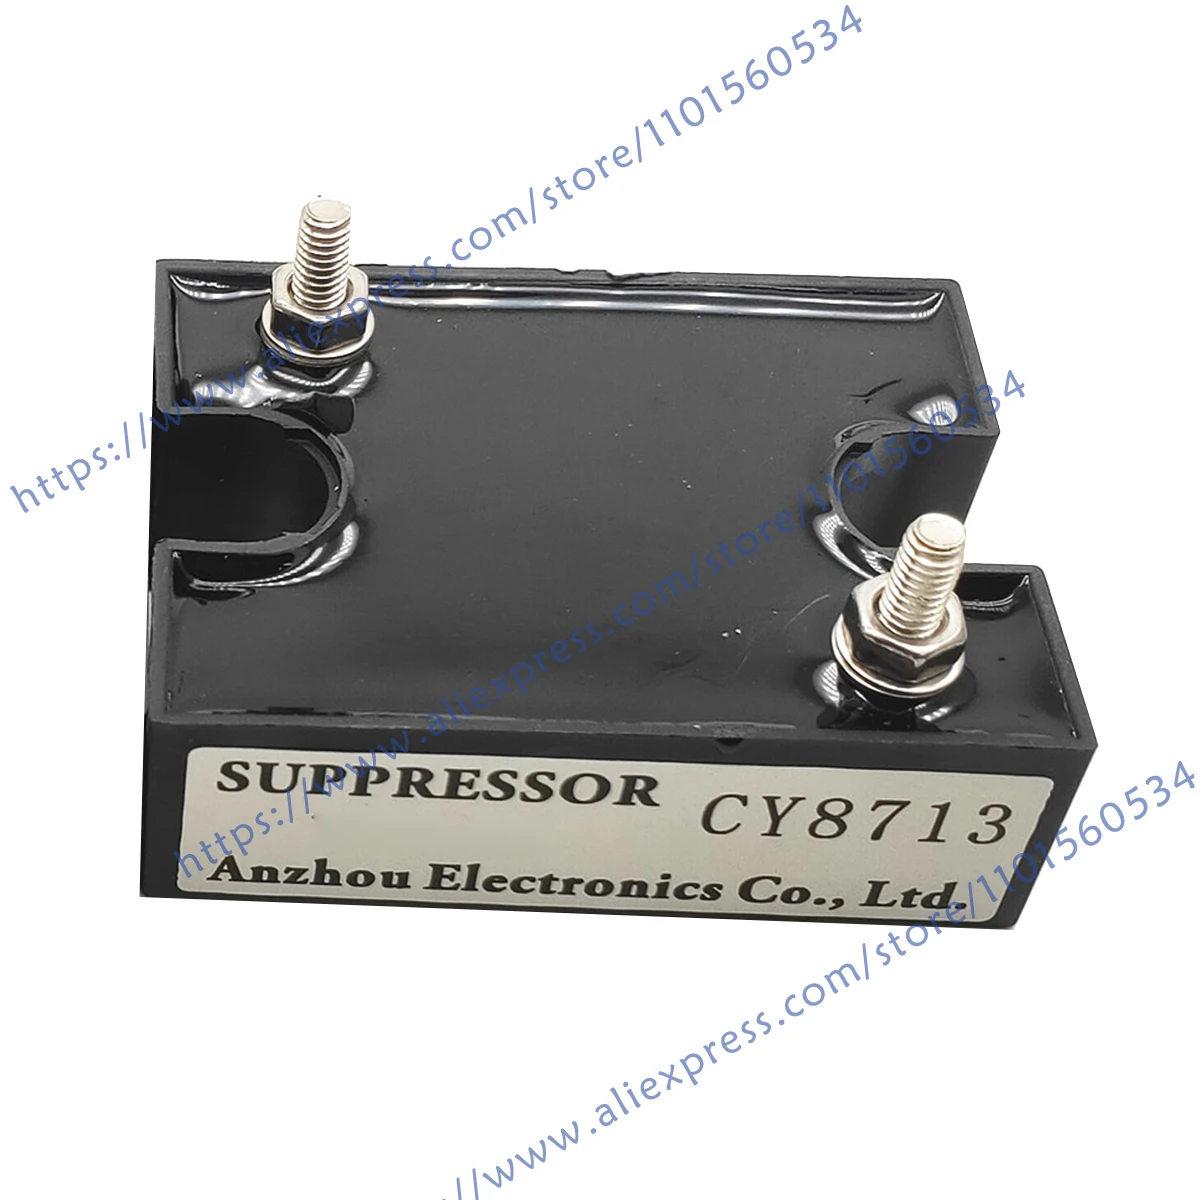 

CY8713 Pressure sensitive module , Brand New Original Spot Photo, 1-Year Warranty